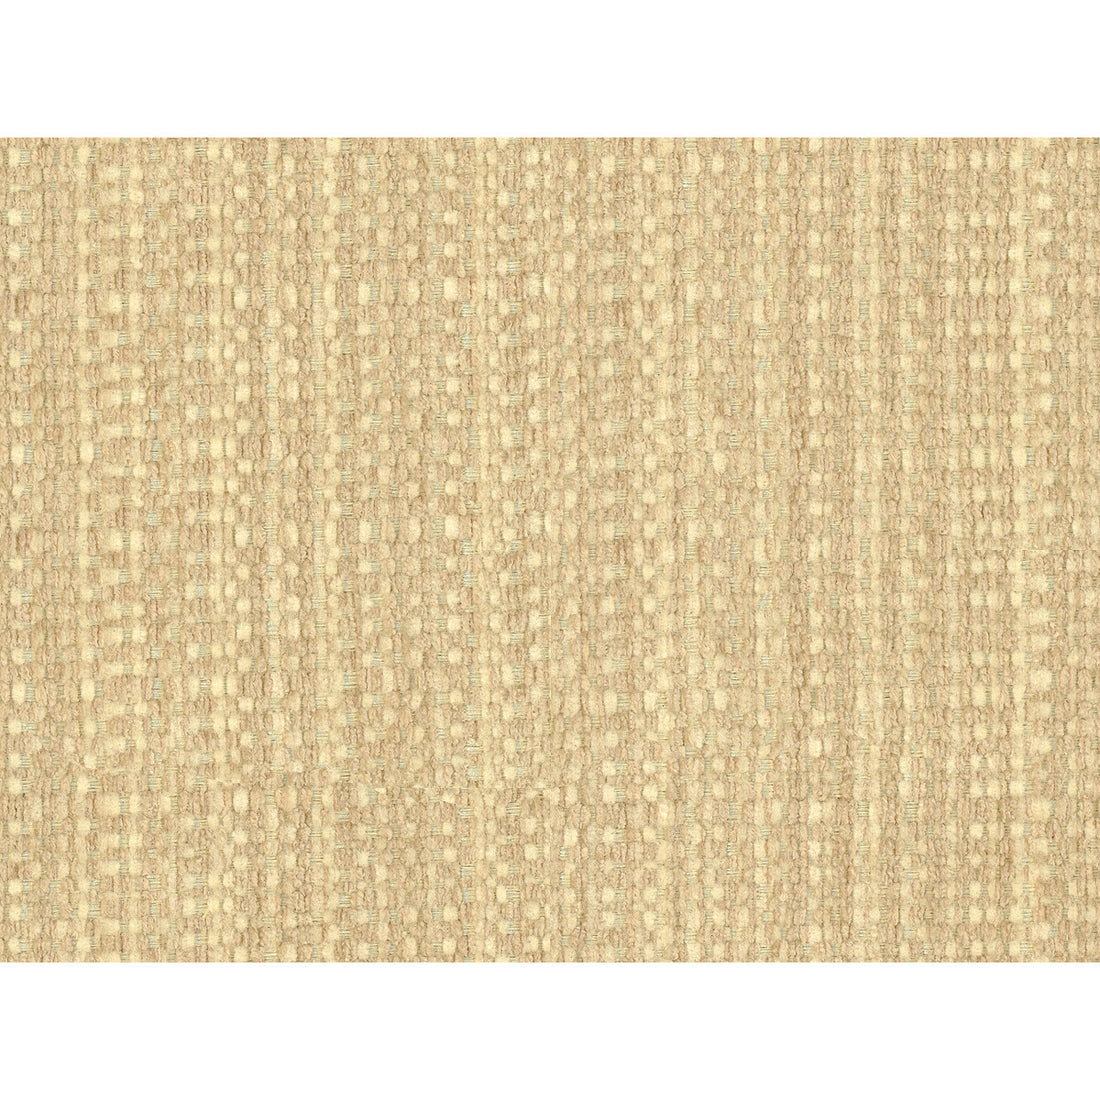 Kravet Smart fabric in 34374-116 color - pattern 34374.116.0 - by Kravet Smart